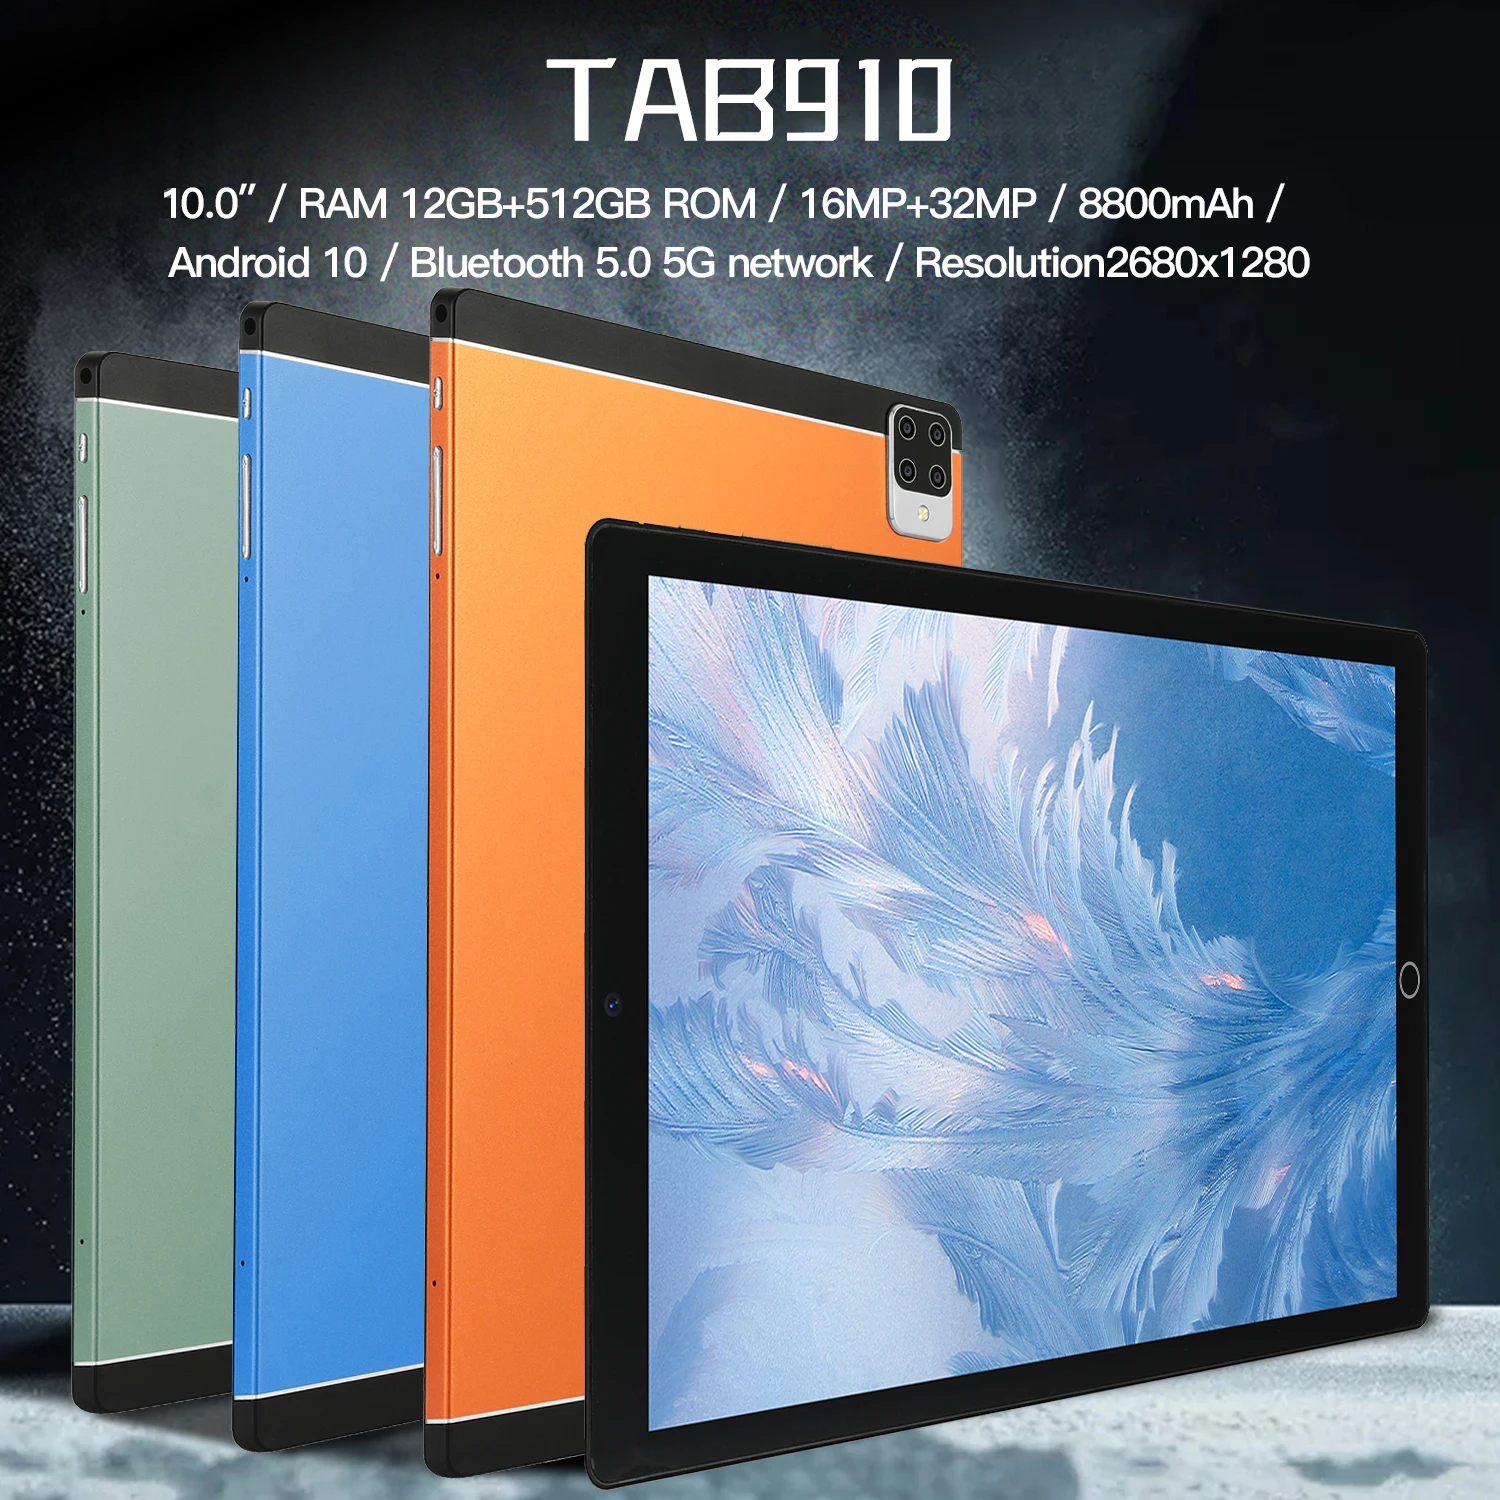 ipad latest model Firmware Tab 910 Android 10 12GB 512GB Pad WIFI MTK6889 Global Version PC 10 Core Tablet 8800 mAh Google Play Tablette latest tablets